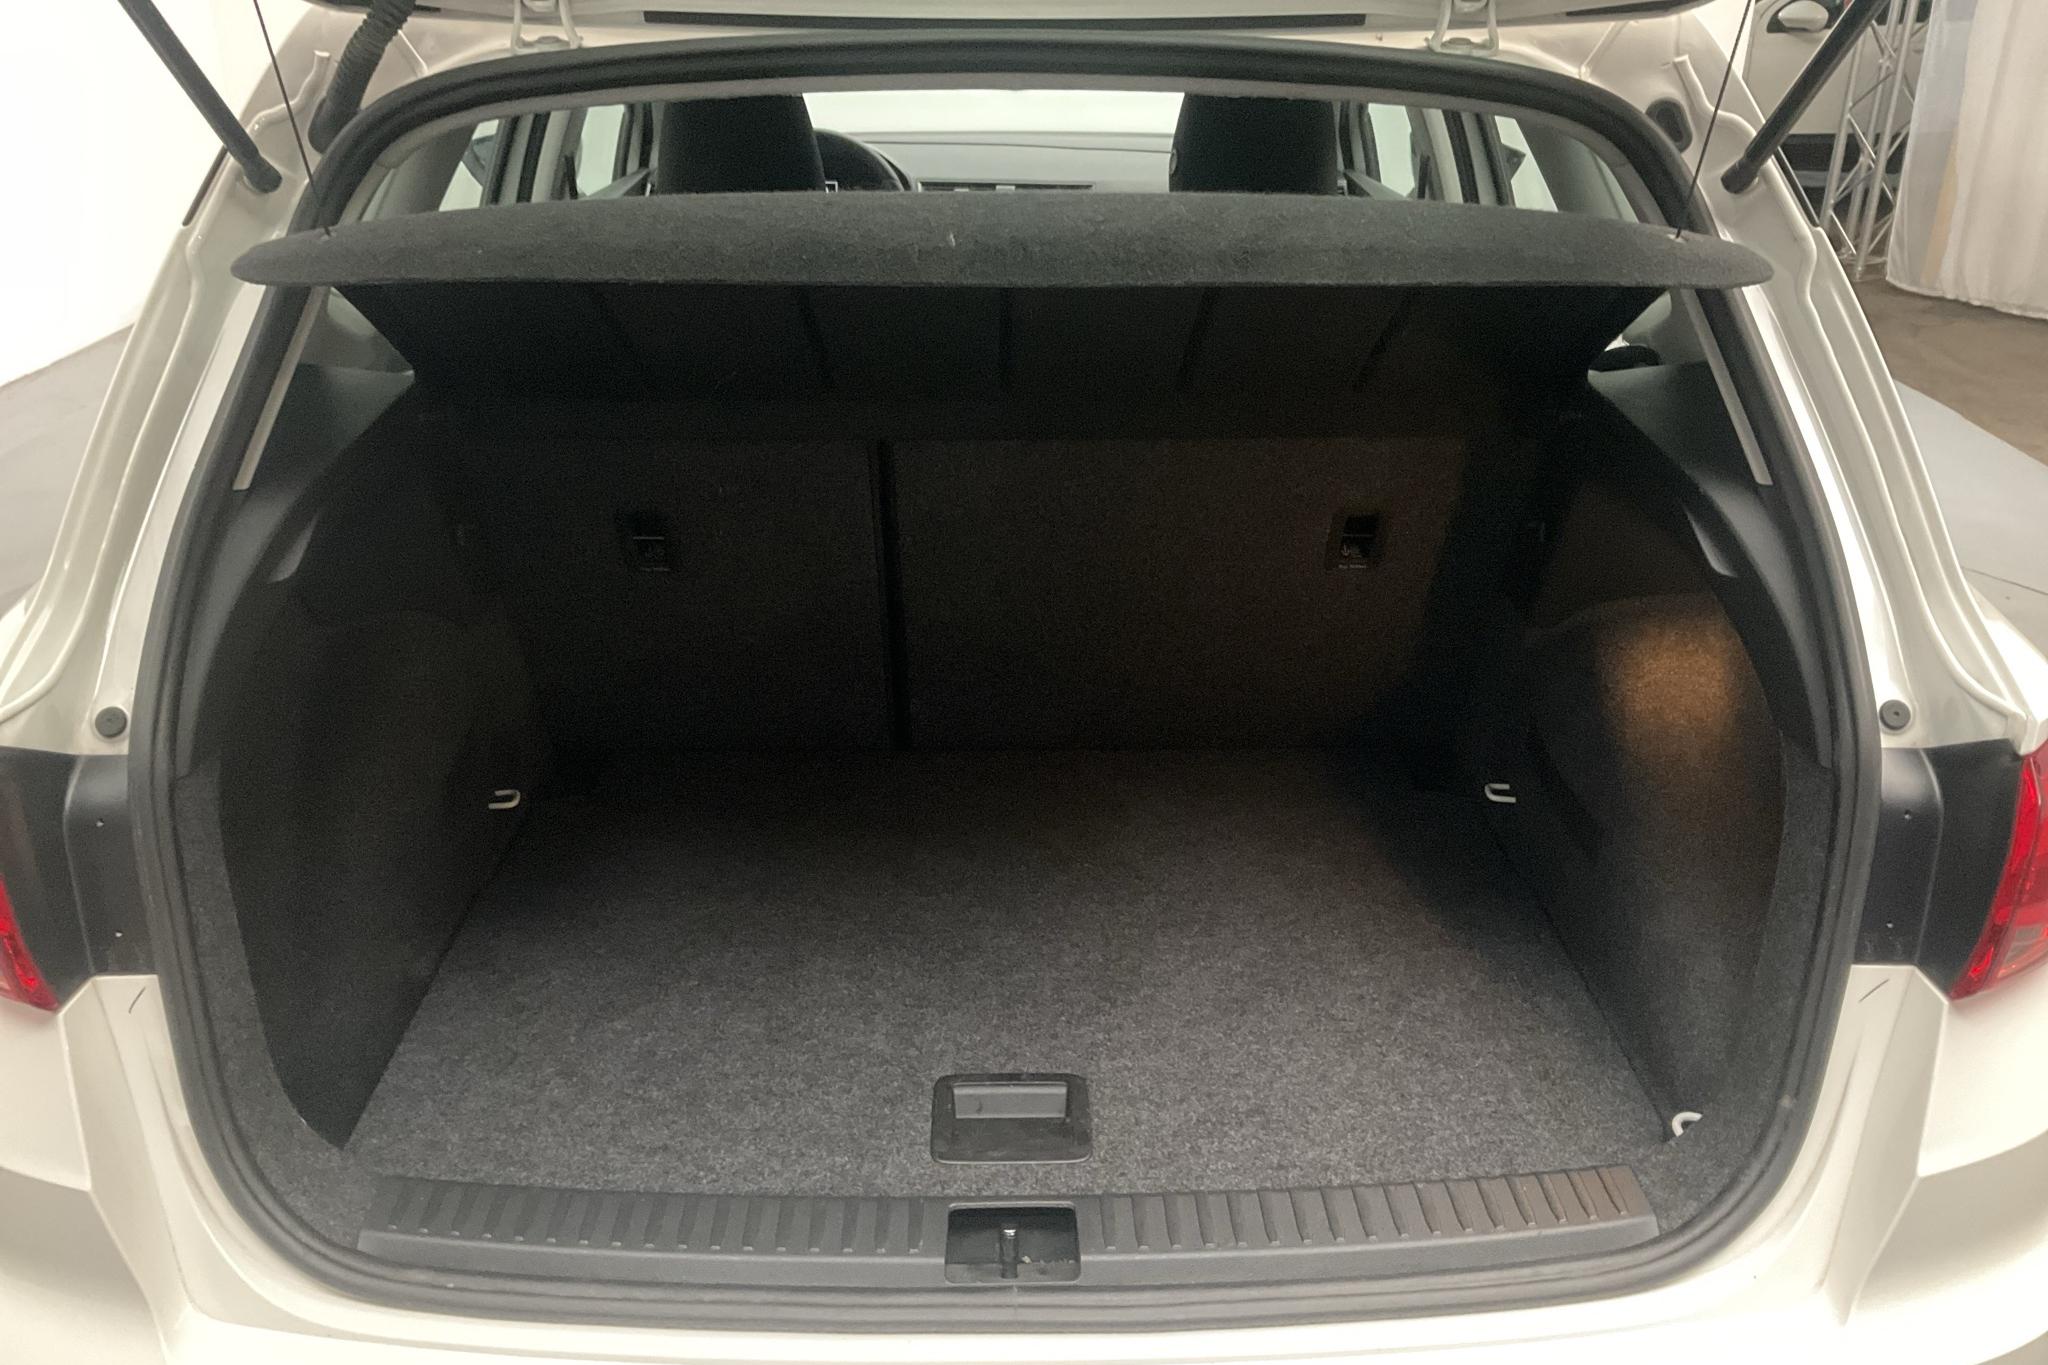 Seat Arona 1.6 TDI 5dr (95hk) - 17 110 km - Manual - white - 2020